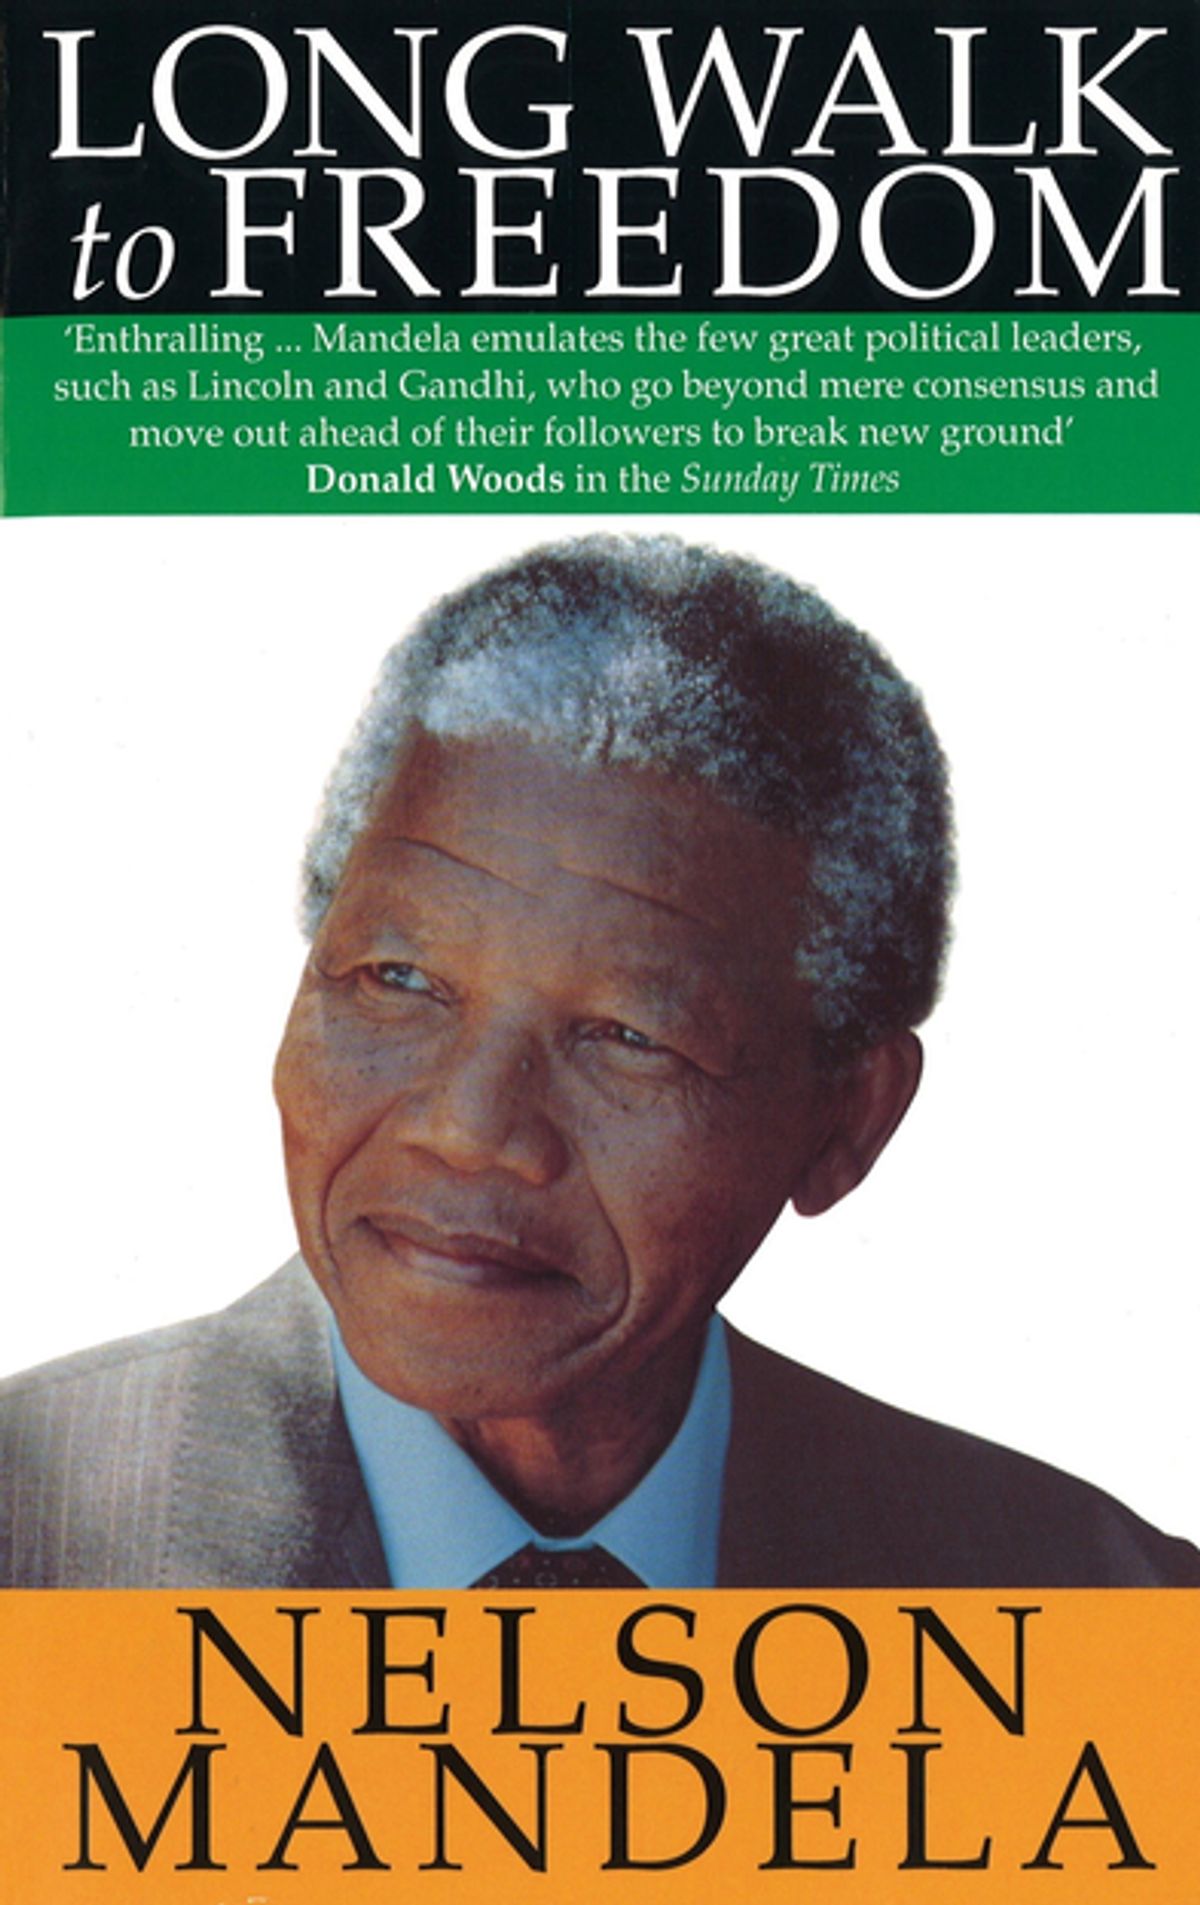 Long Walk to Freedom (Abridged Edition) by Nelson Mandela